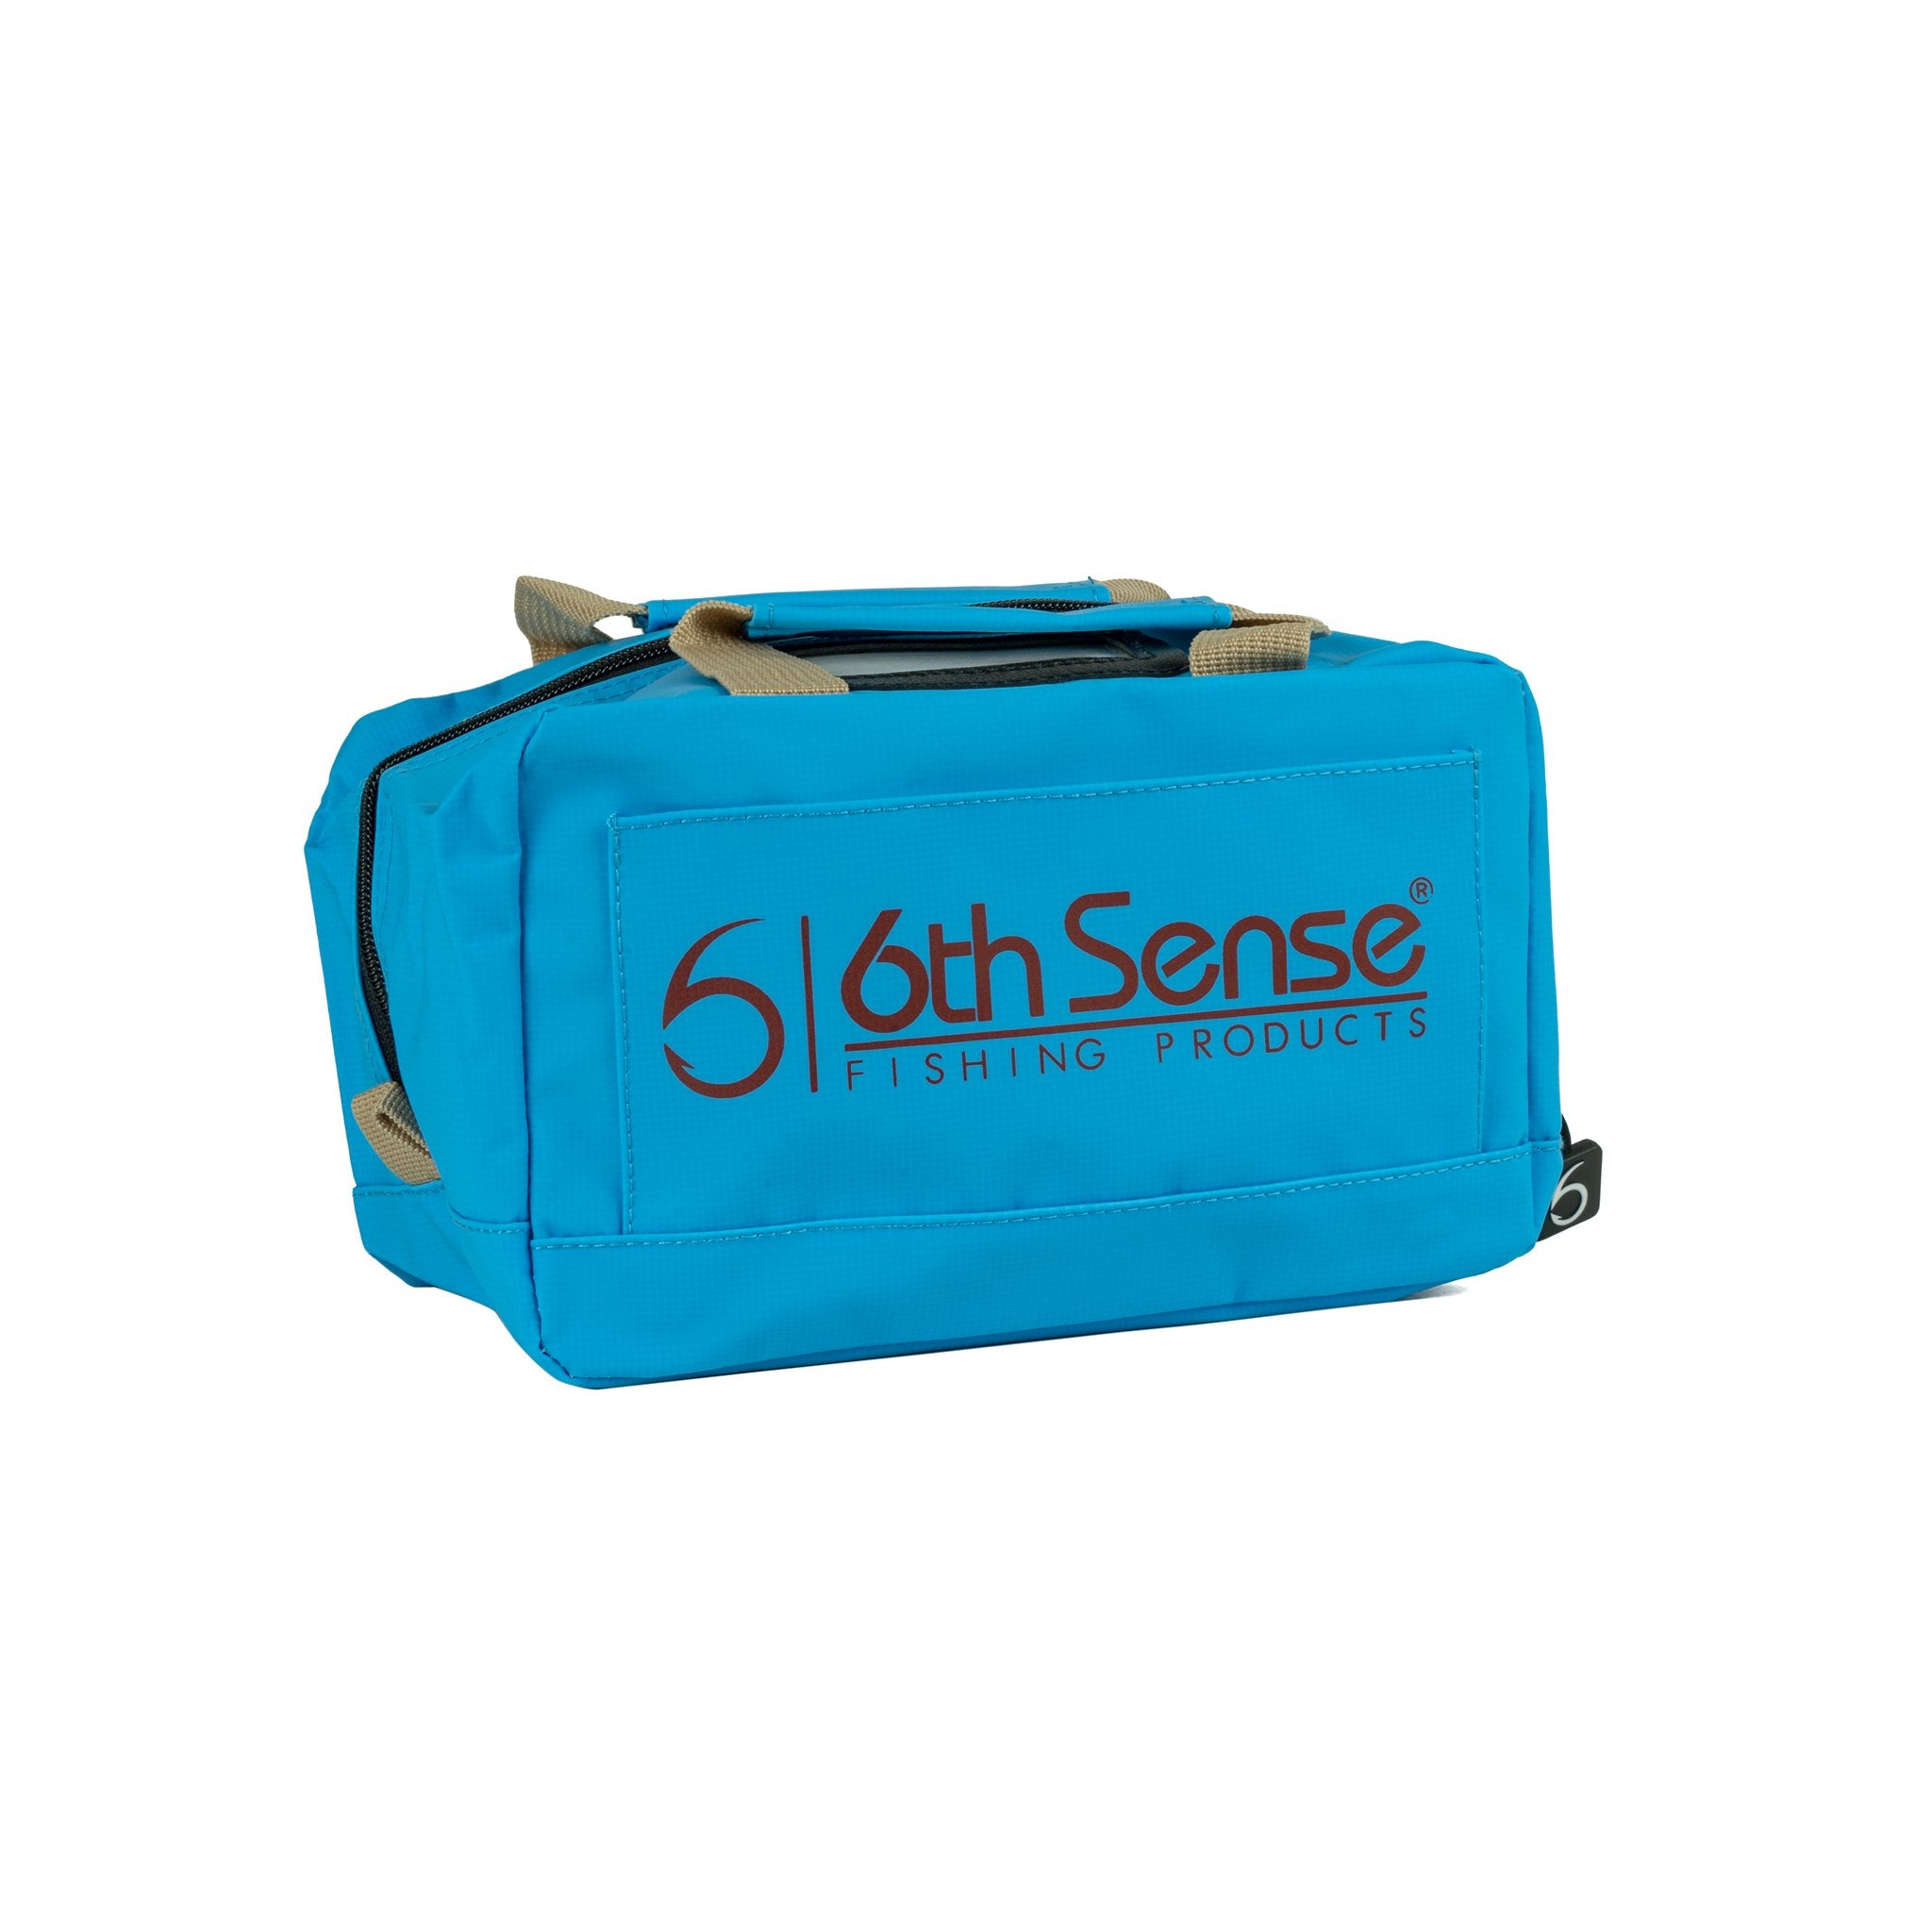 6th Sense Bait Bag - Small - Lime Green –